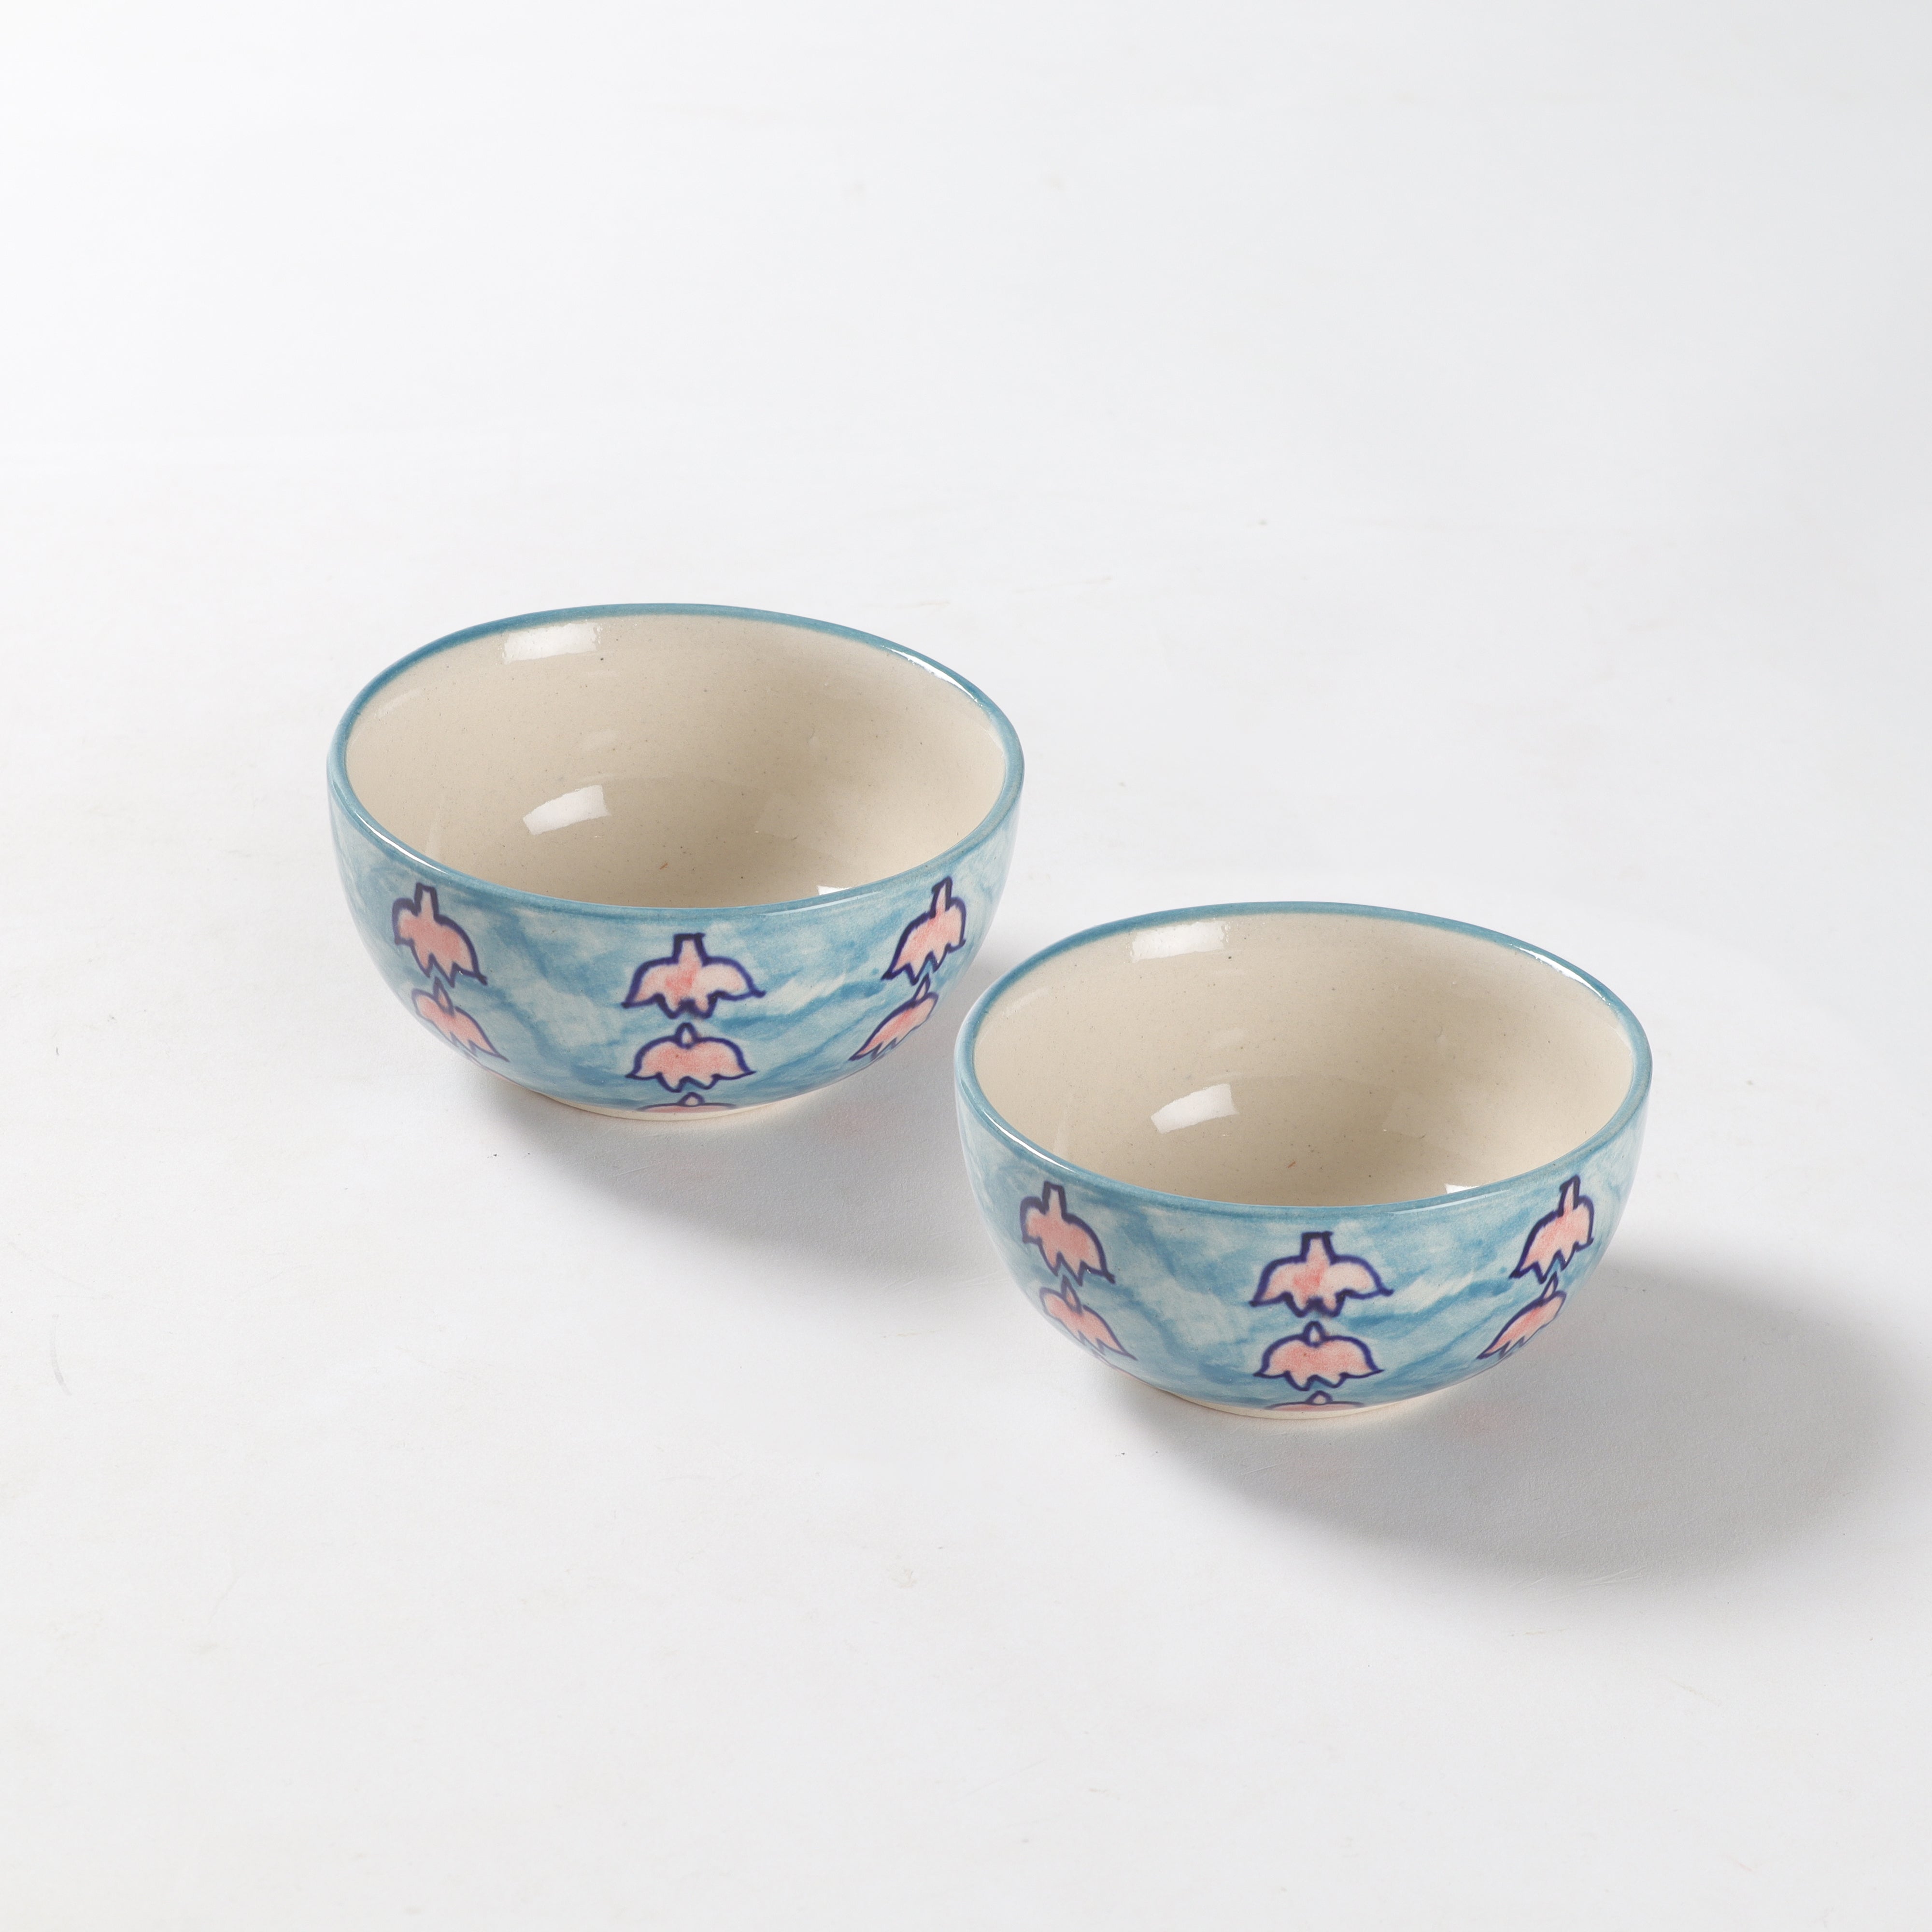 Handpainted Ceramic Portion Bowls - Set of 2